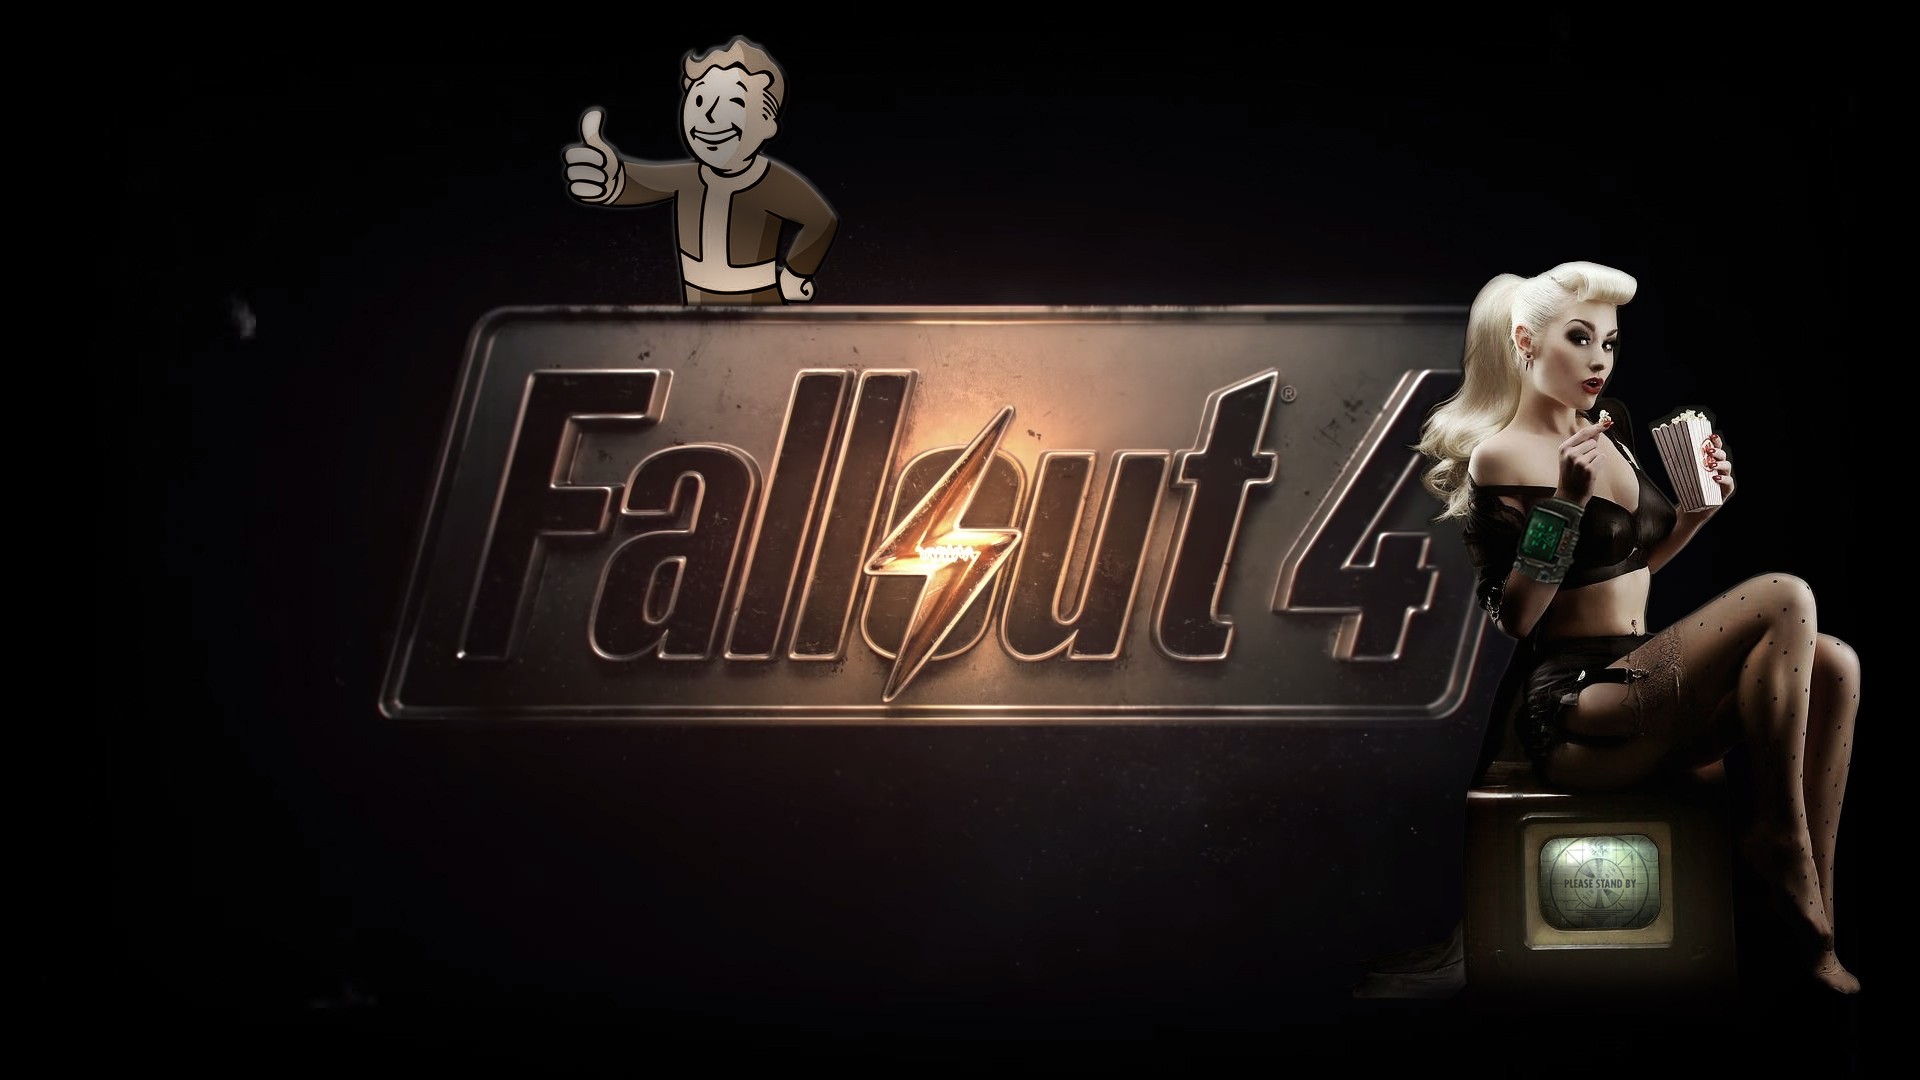 General 1920x1080 Fallout 4 Fallout Vault Boy popcorn video games women PC gaming black background simple background blonde food TV makeup bra stockings black bras